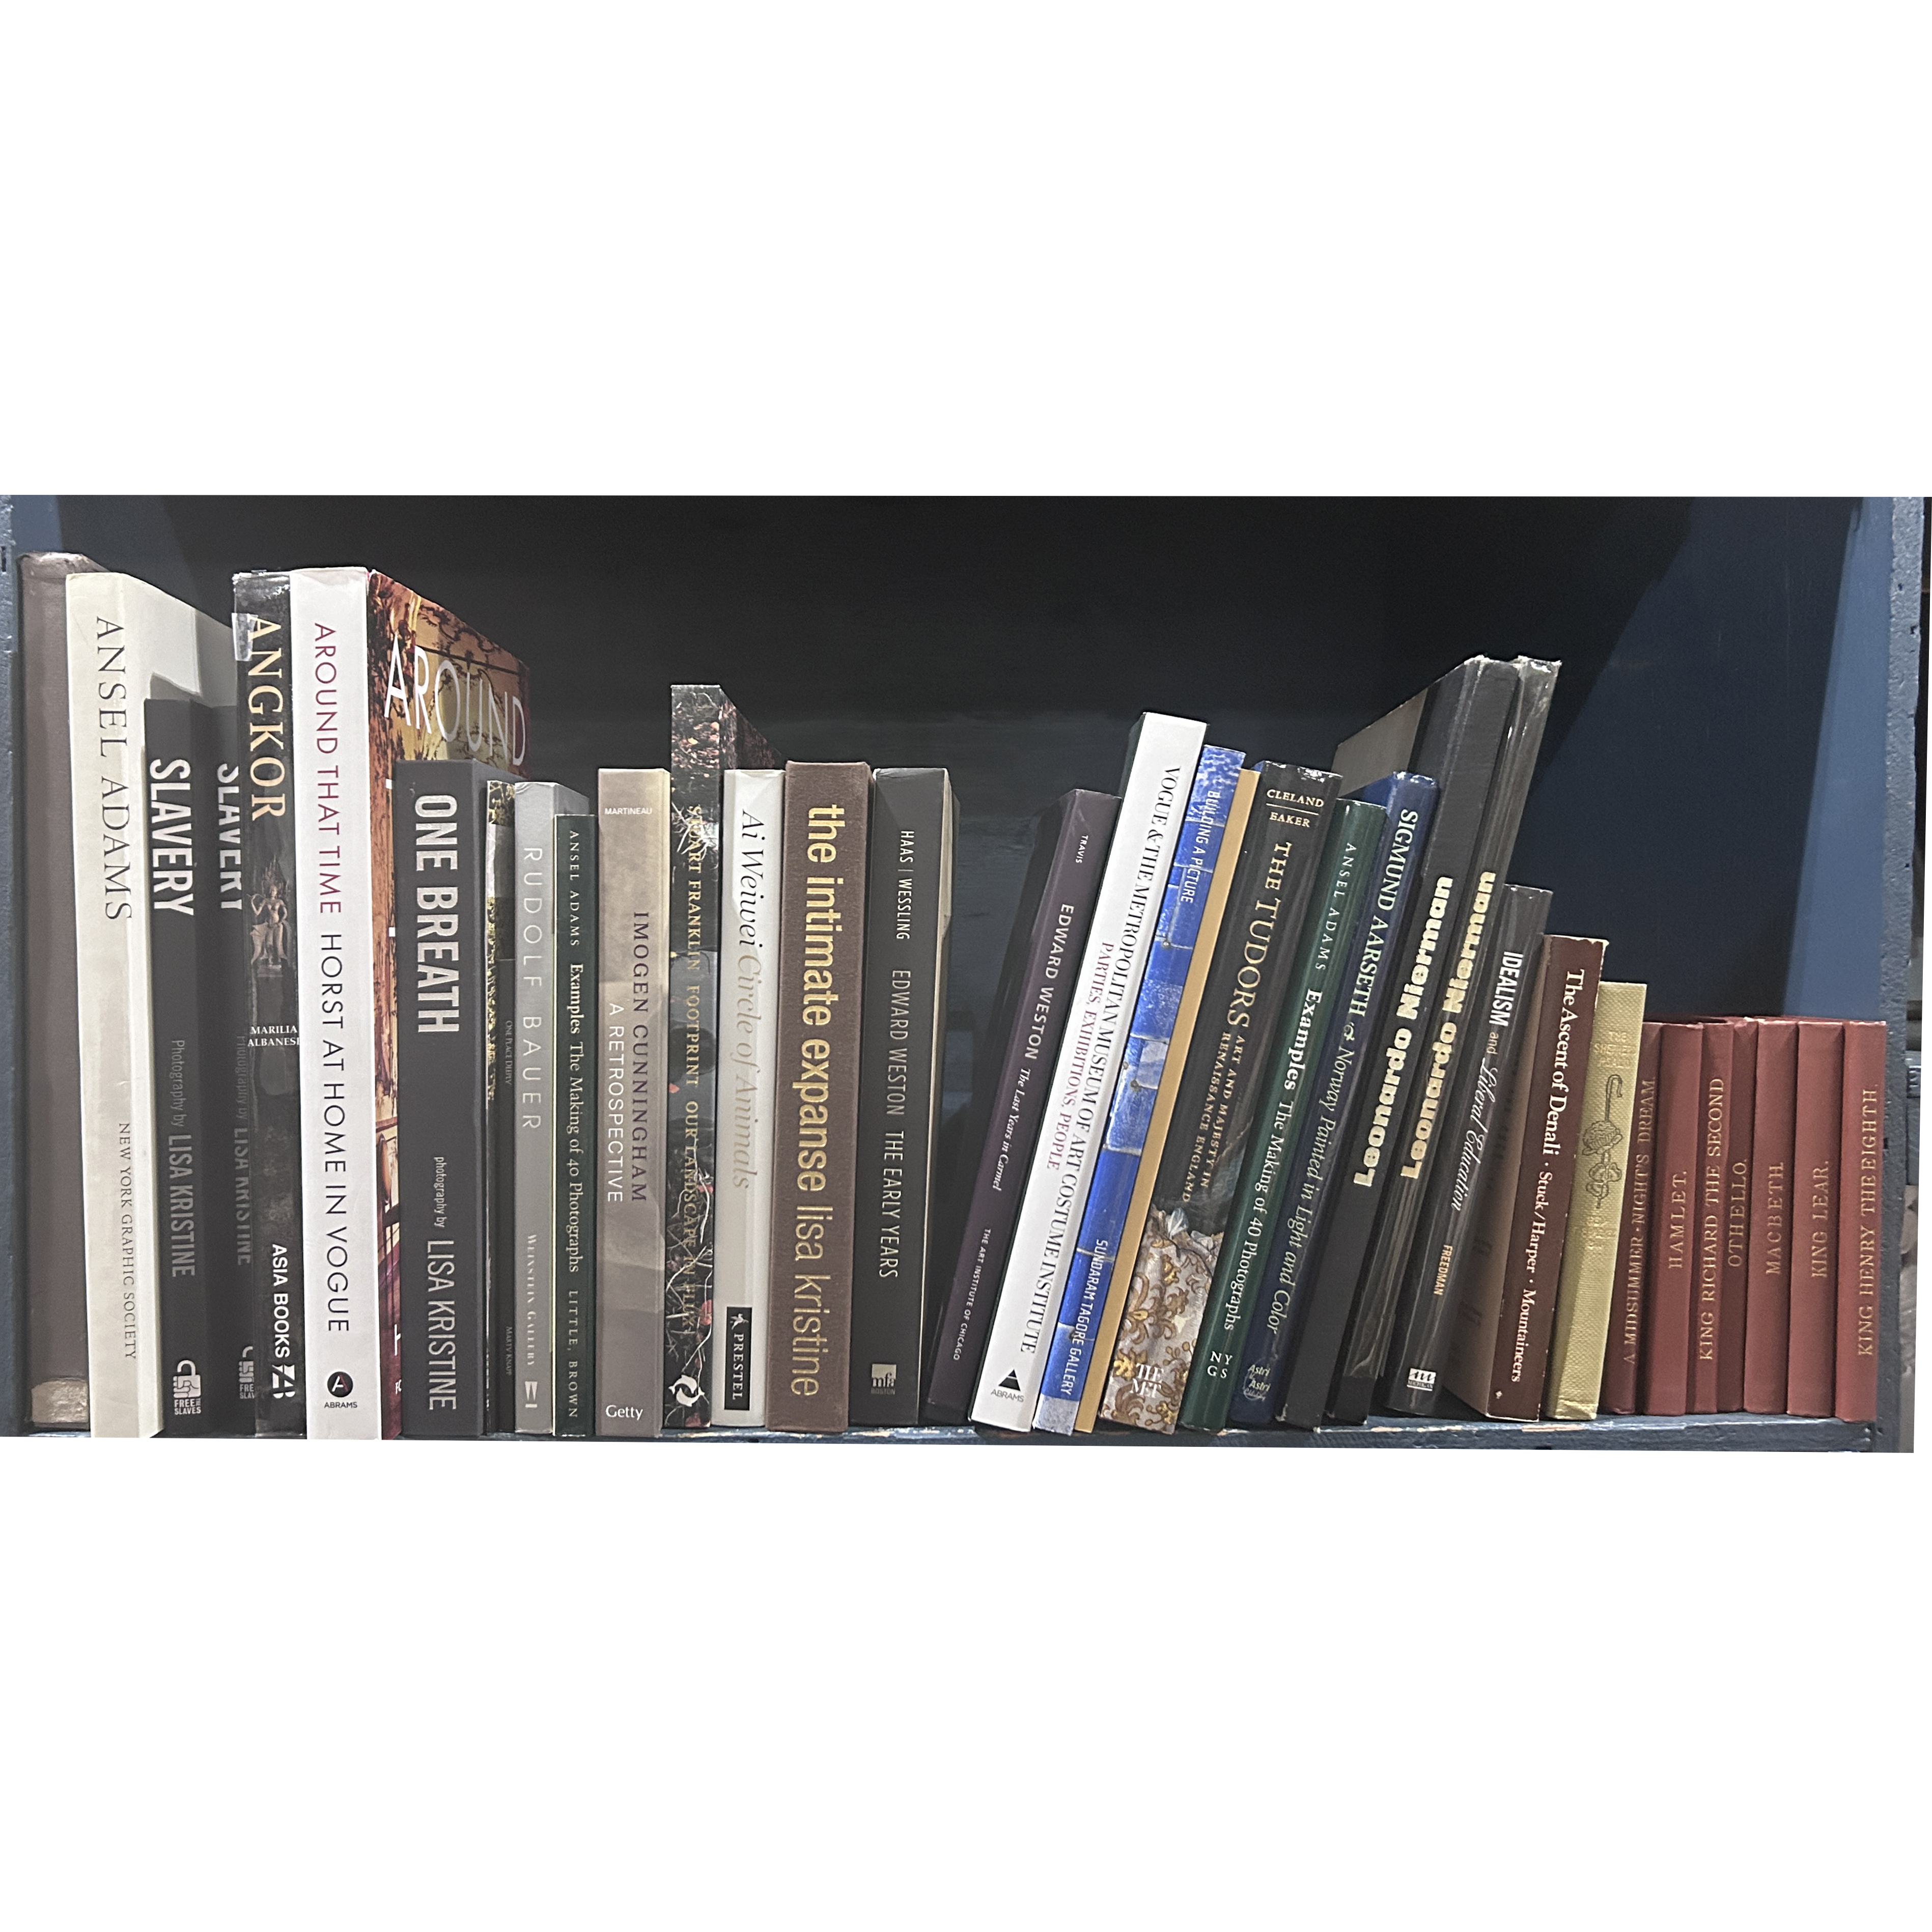 ONE SHELF OF BOOKS One shelf of 3ce411